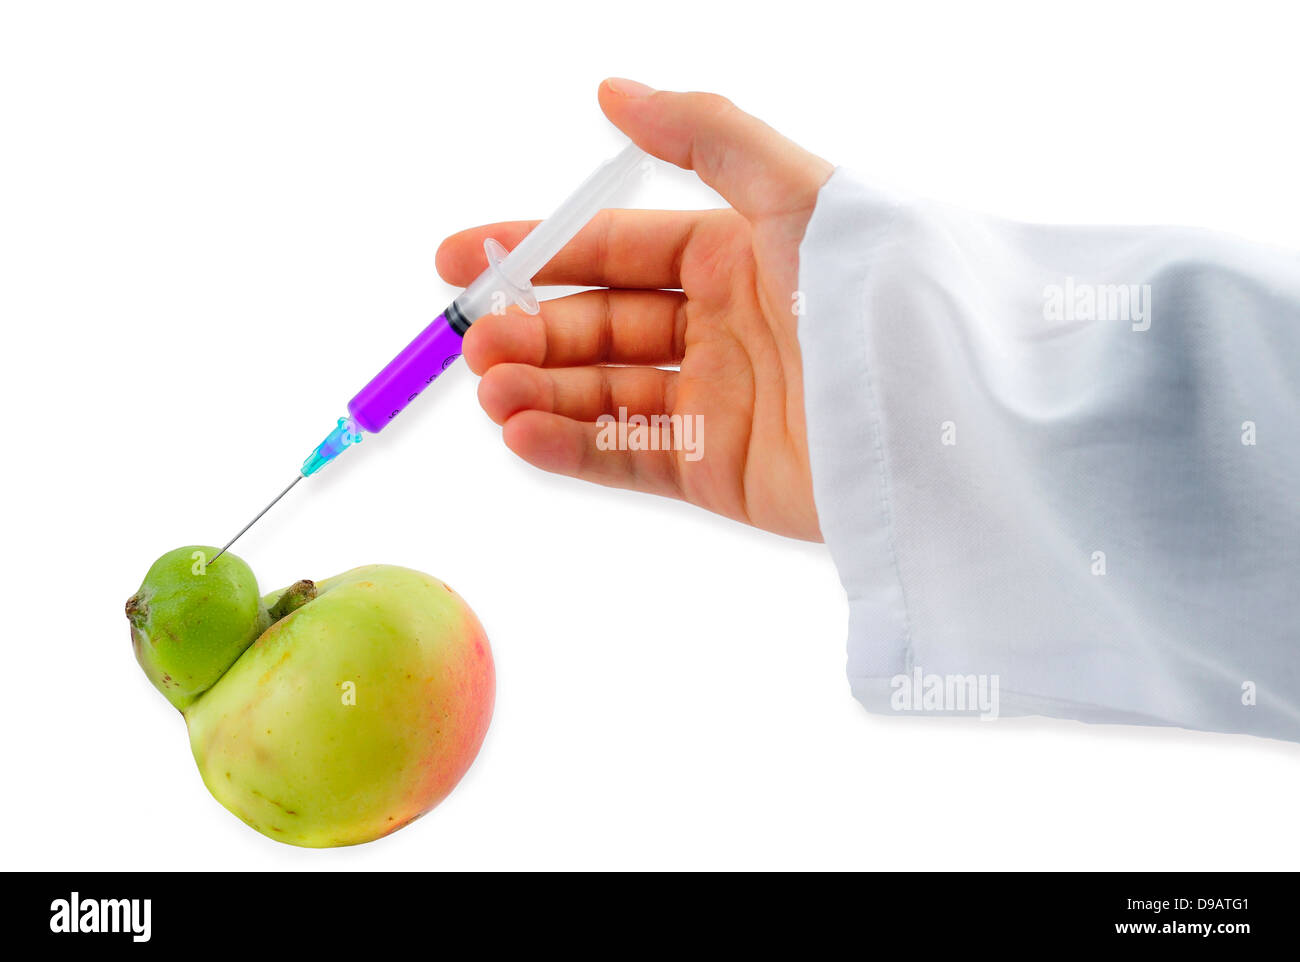 Genetic Modification - purple Liquid injecting into Apple Stock Photo